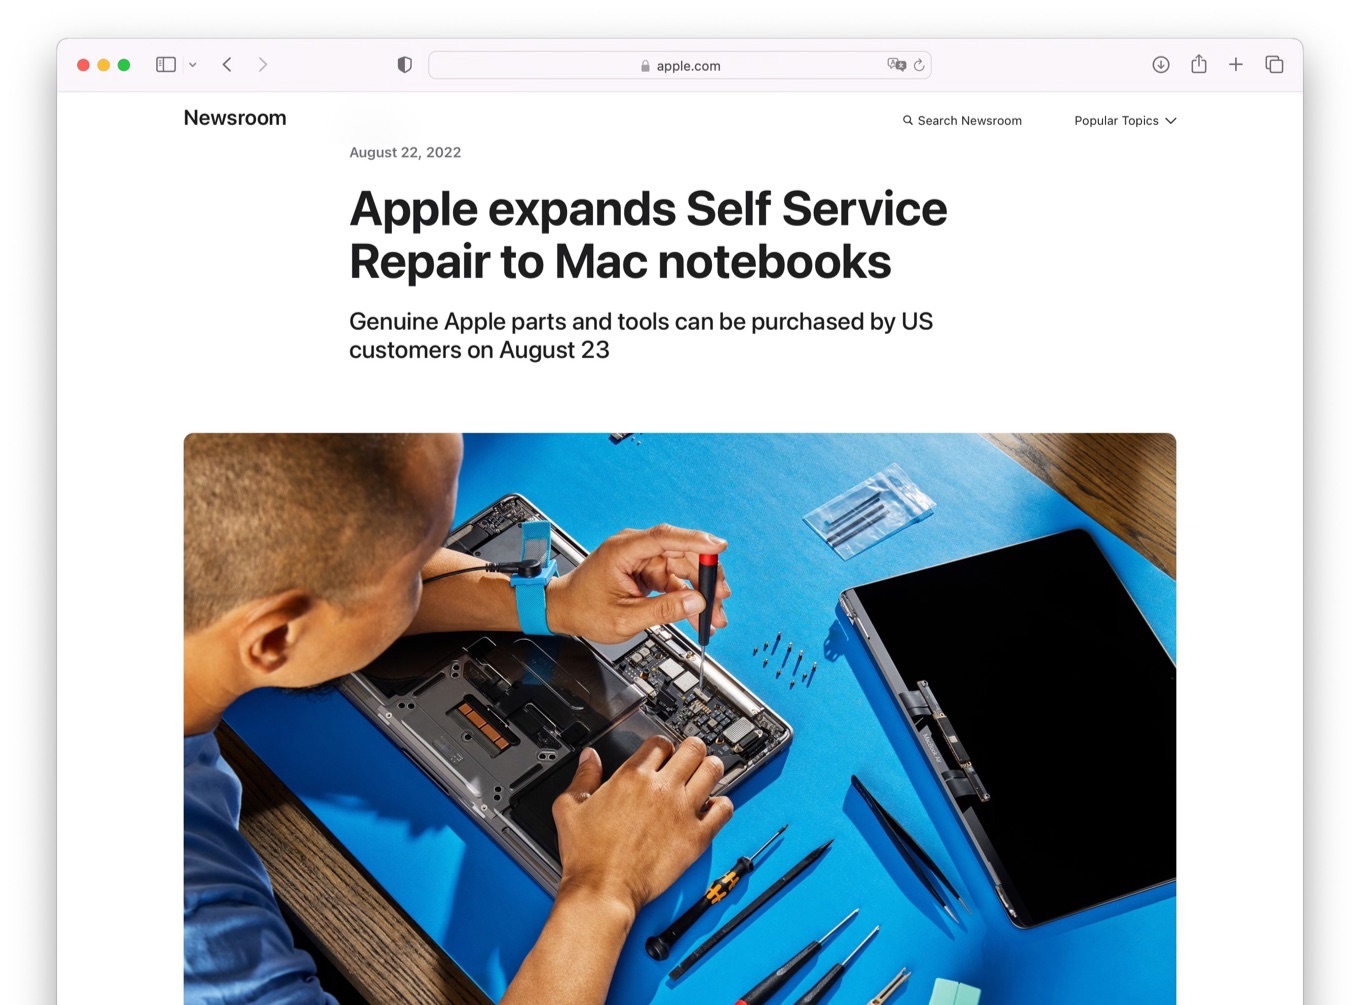 Apple expands Self Service Repair to M1 MacBooks